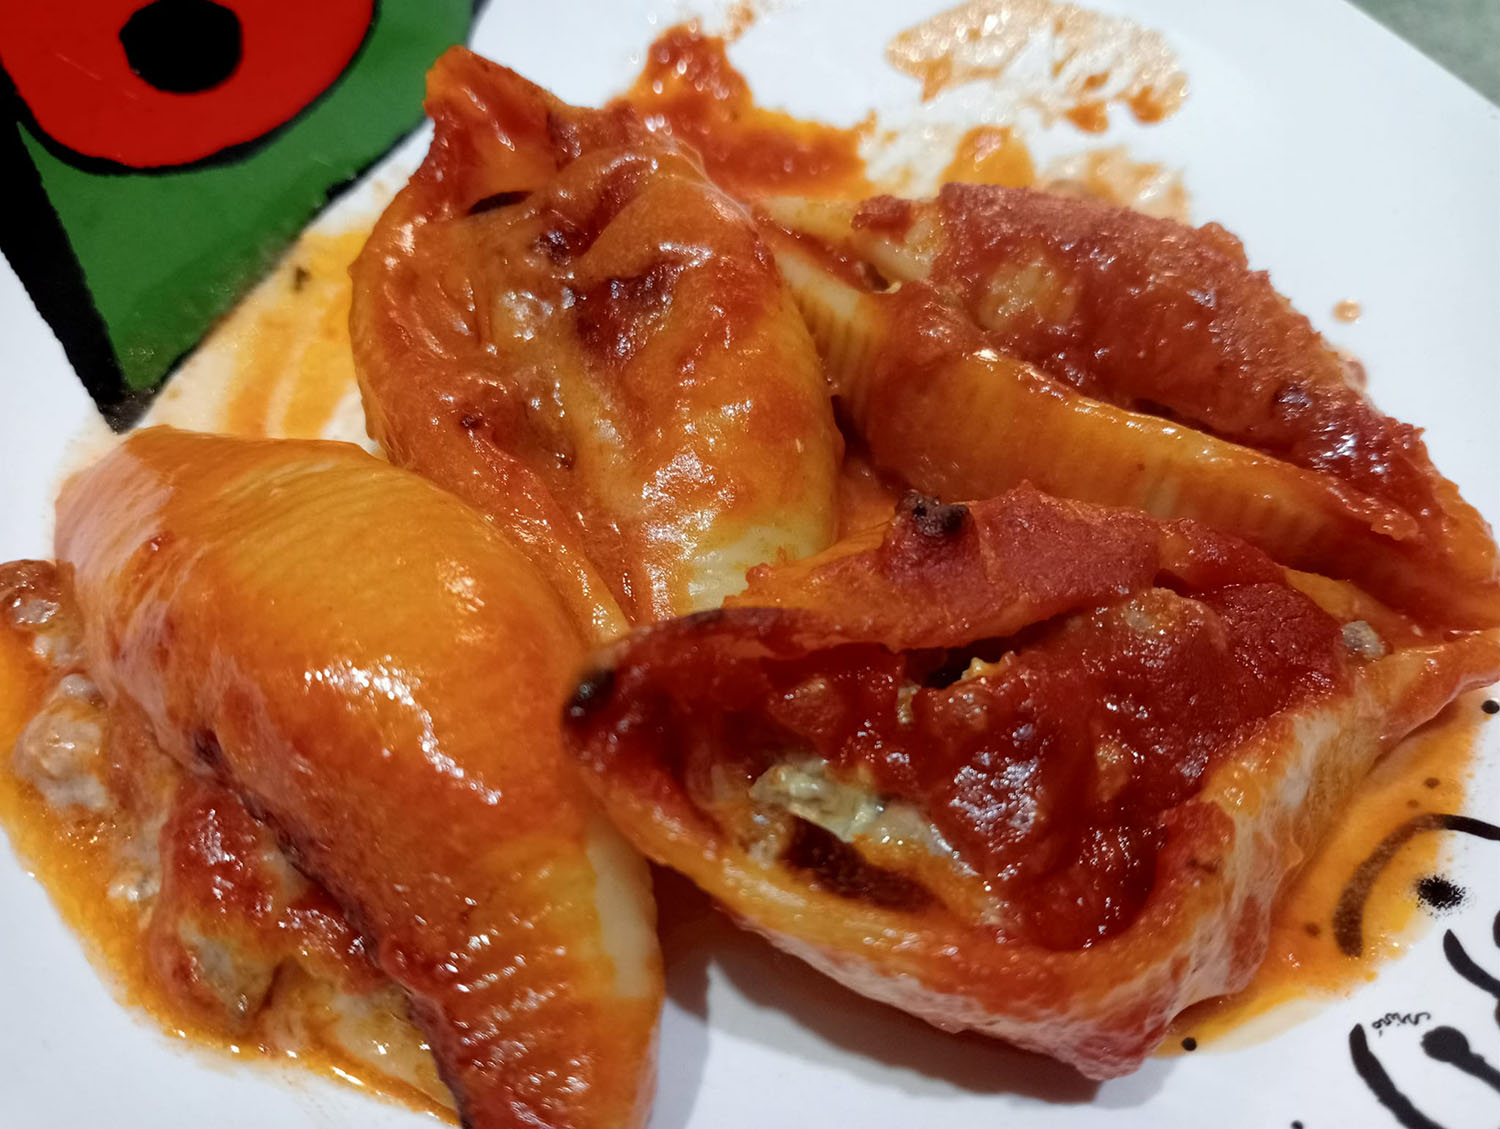 conchiglioni stuffed with sauce